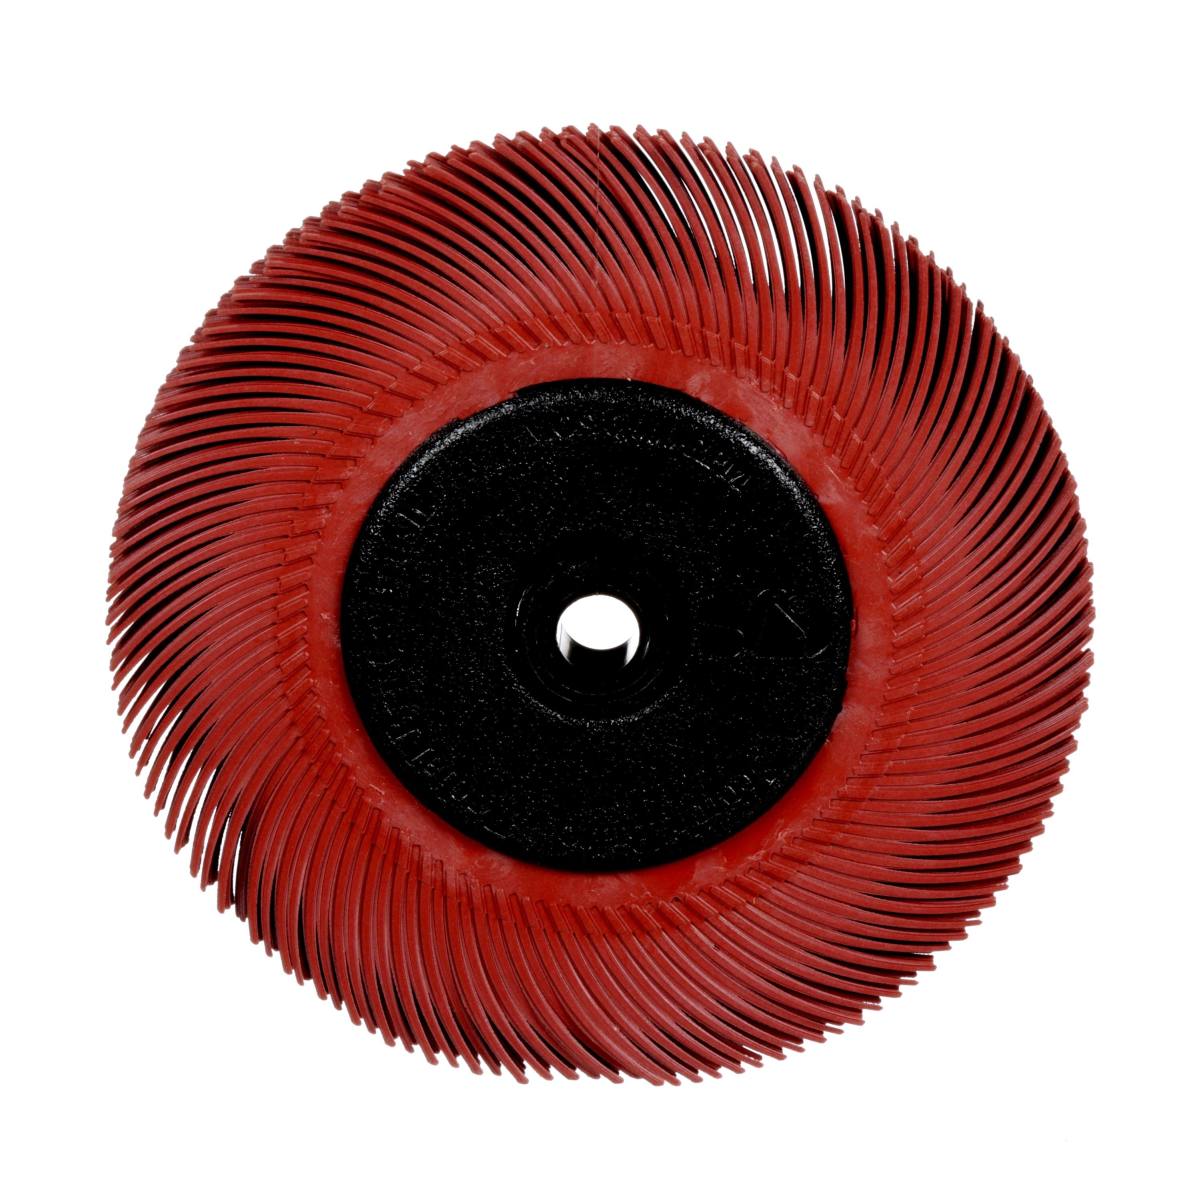 3M Scotch-Brite Radial Bristle Disc BB-ZB avec bride, rouge, 152,4 mm, P220, type C #33213